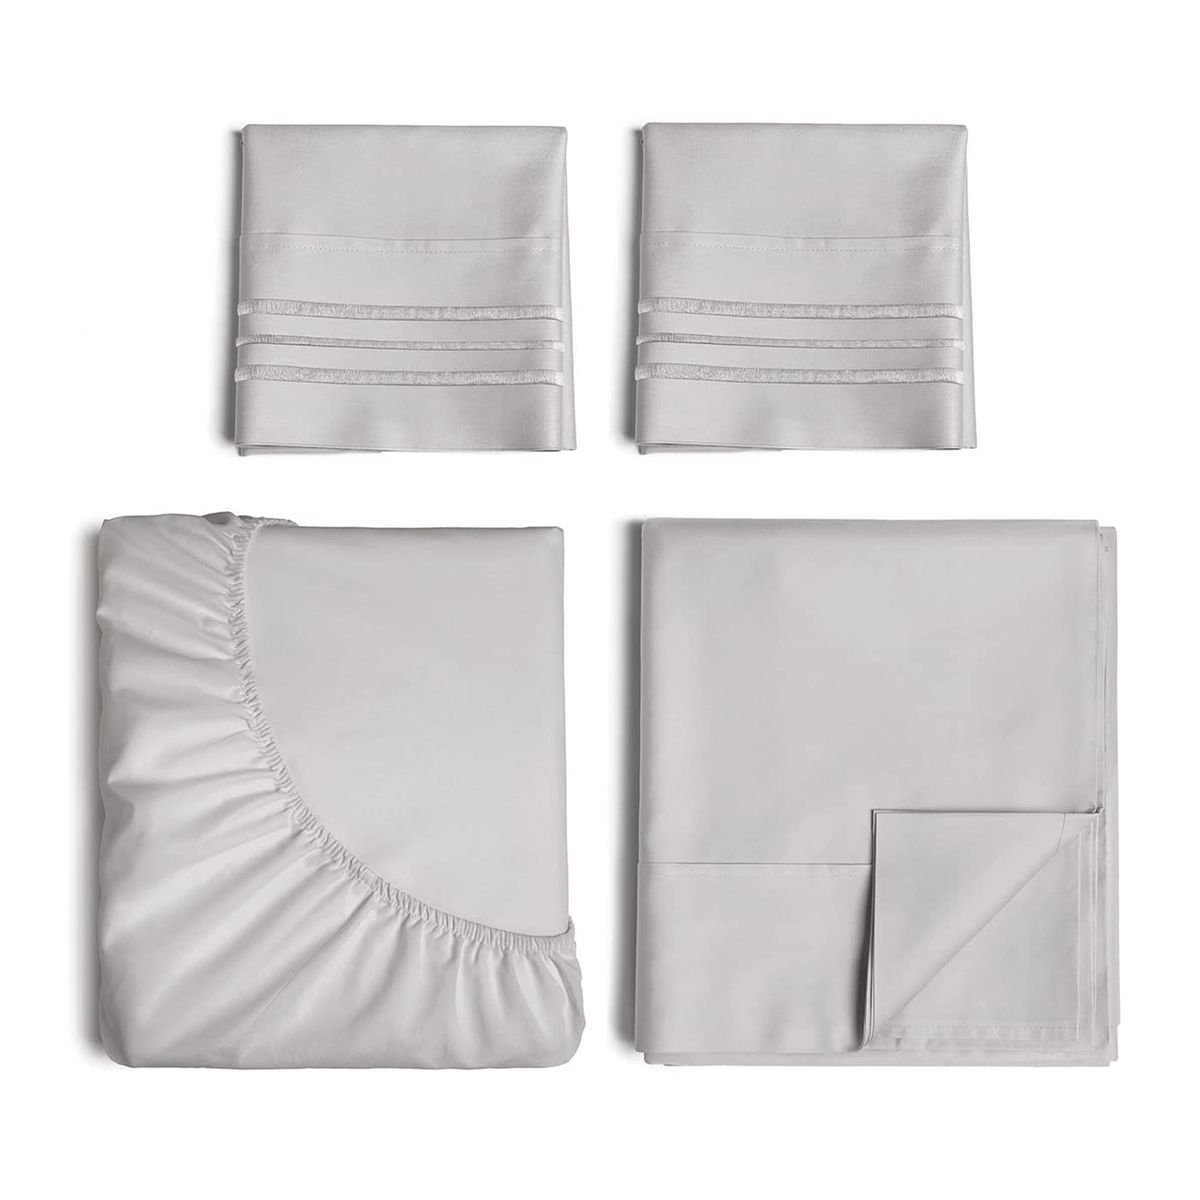 CGK Unlimited bed sheet set